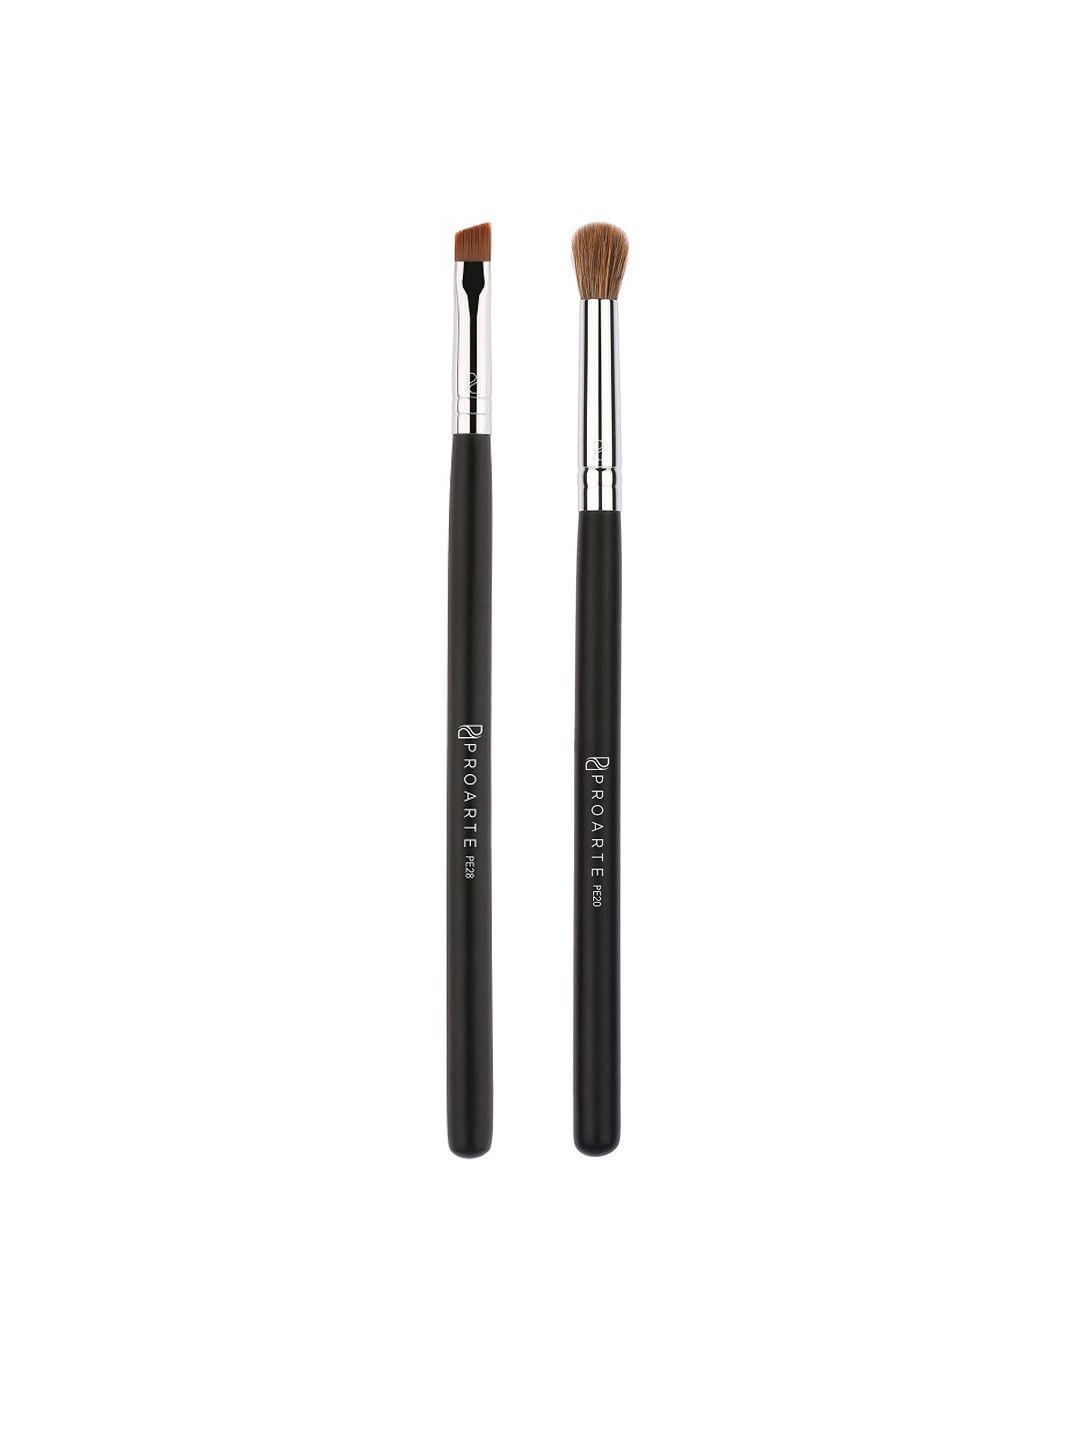 proarte set of 2 makeup brush